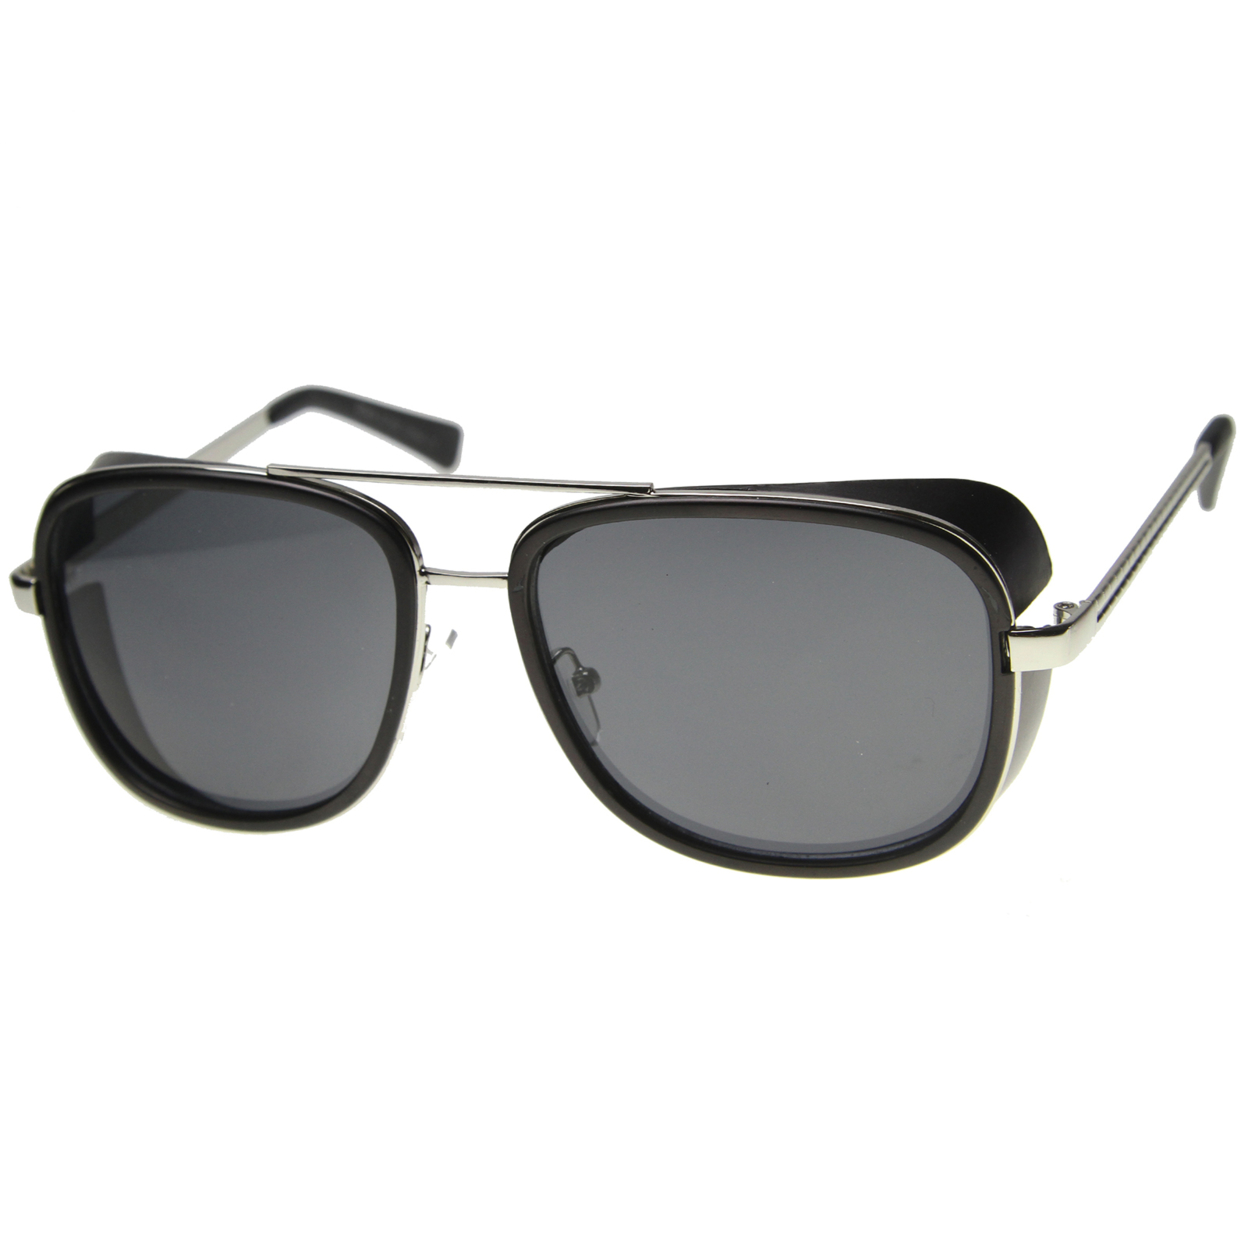 Unisex Aviator Sunglasses With UV400 Protected Mirrored Lens 9896 - Shiny Black-Gold / Midnight